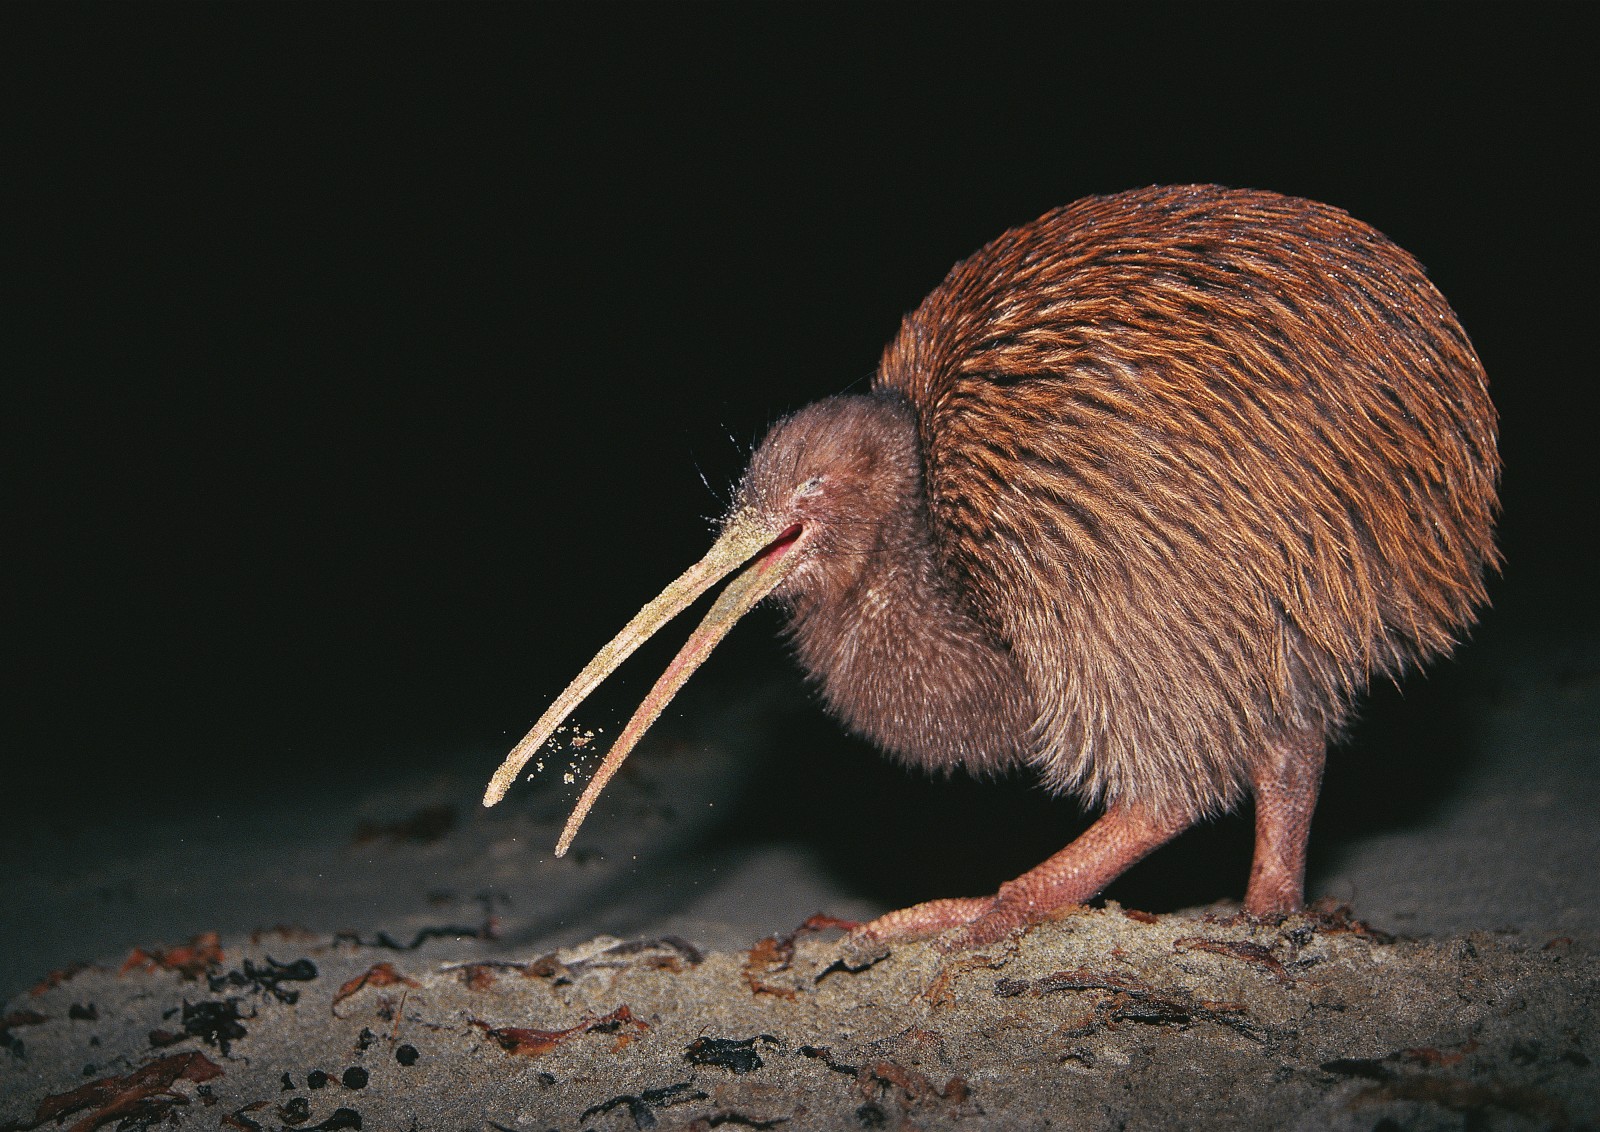 Kiwi orchestra. Нелетающая птица киви. Птица киви в новой Зеландии. Apteryx haastii. Киви птица скелет.